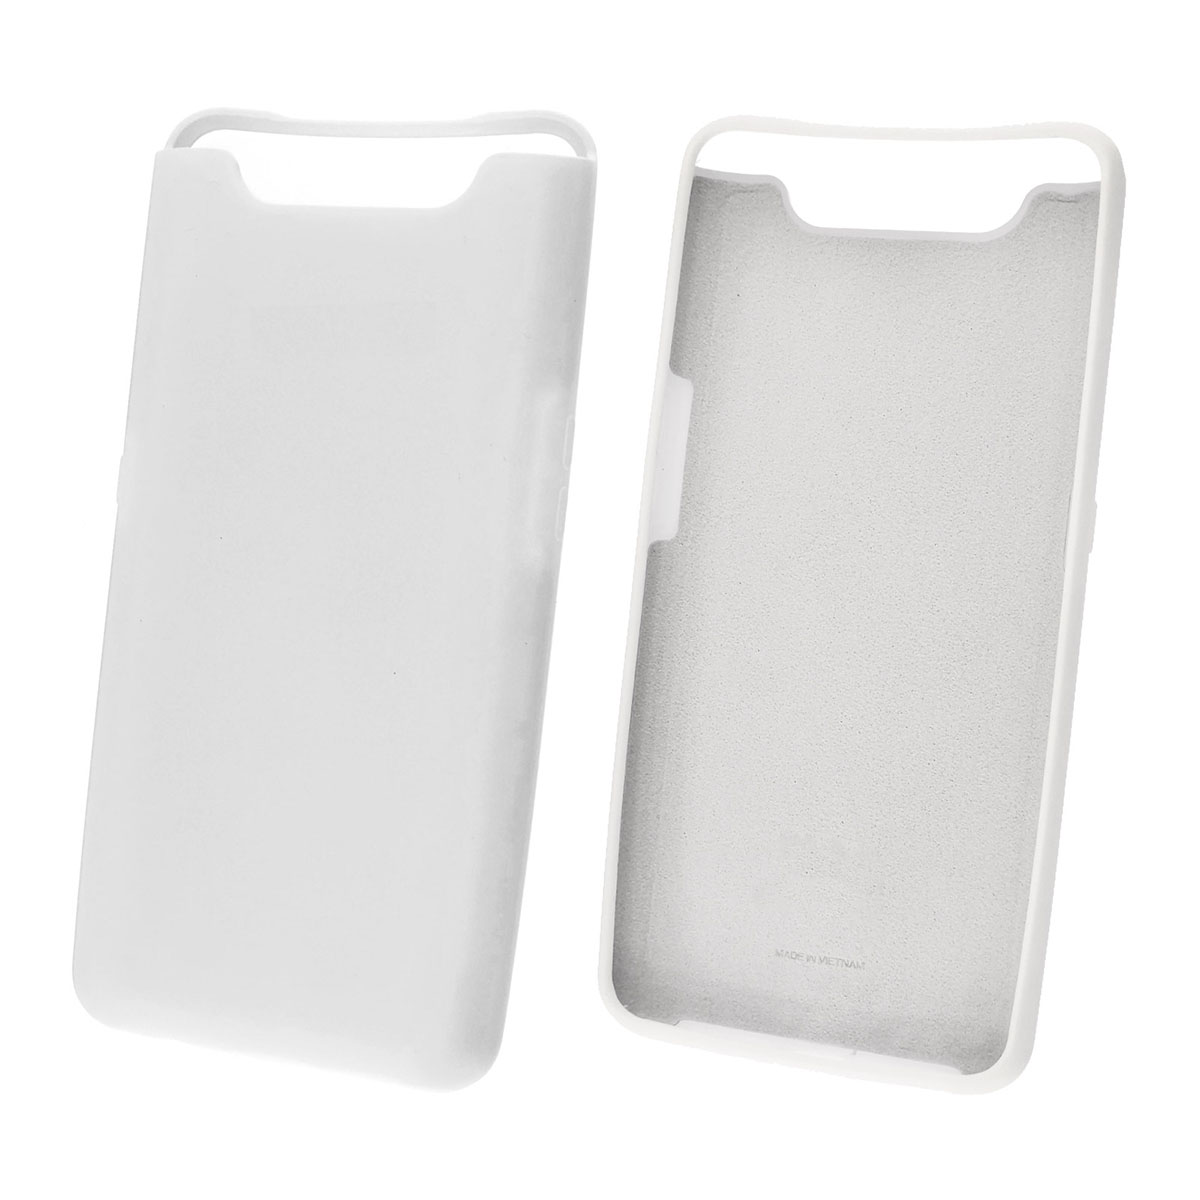 Чехол накладка Silicon Cover для Samsung A80 2019 (SM-A805), силикон, бархат, цвет белый.